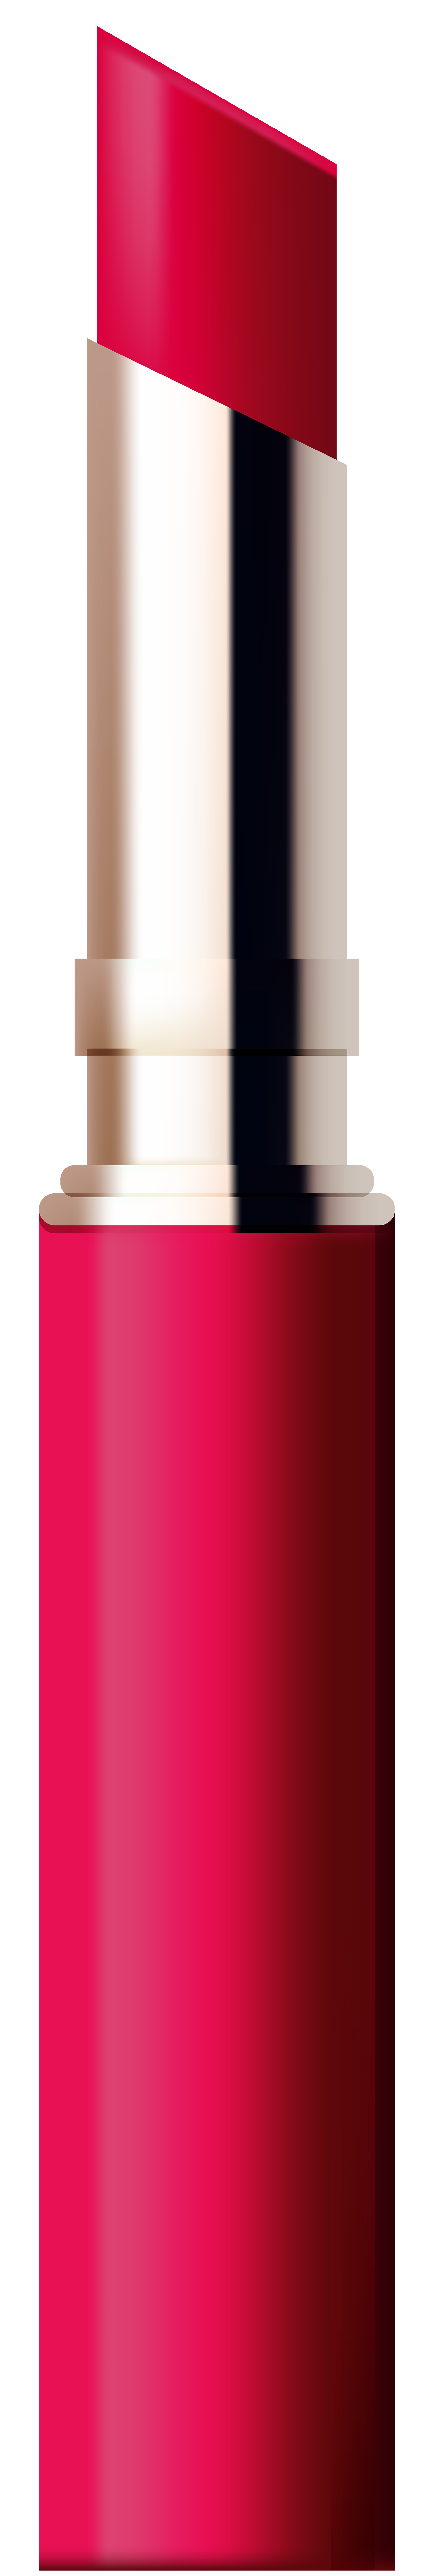 lipstick clipart bottle